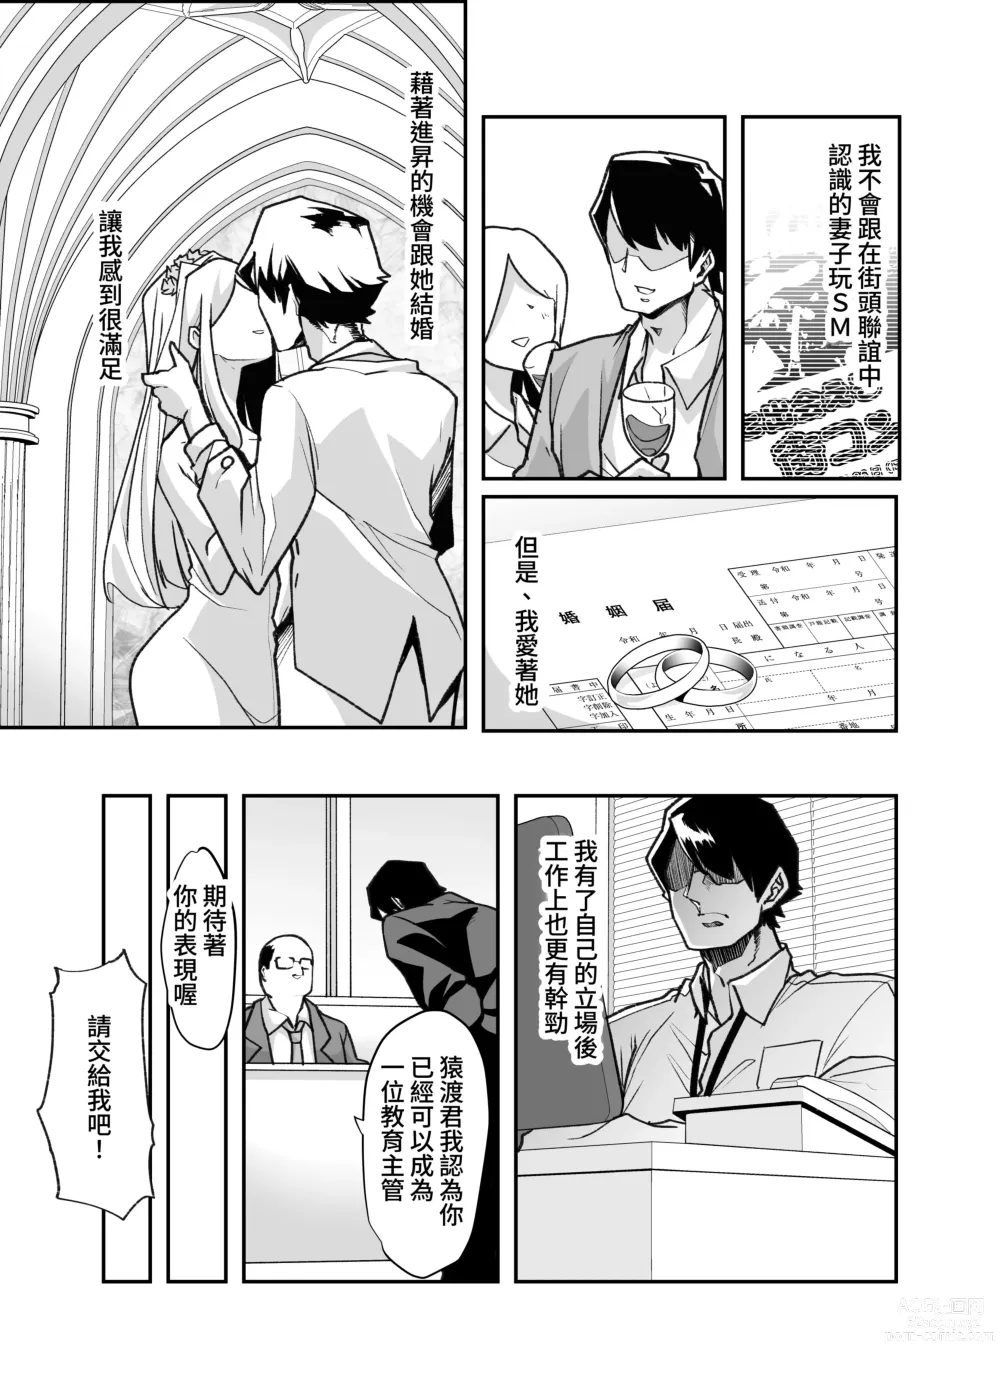 Page 5 of doujinshi 野生受虐癖生態圖鑑